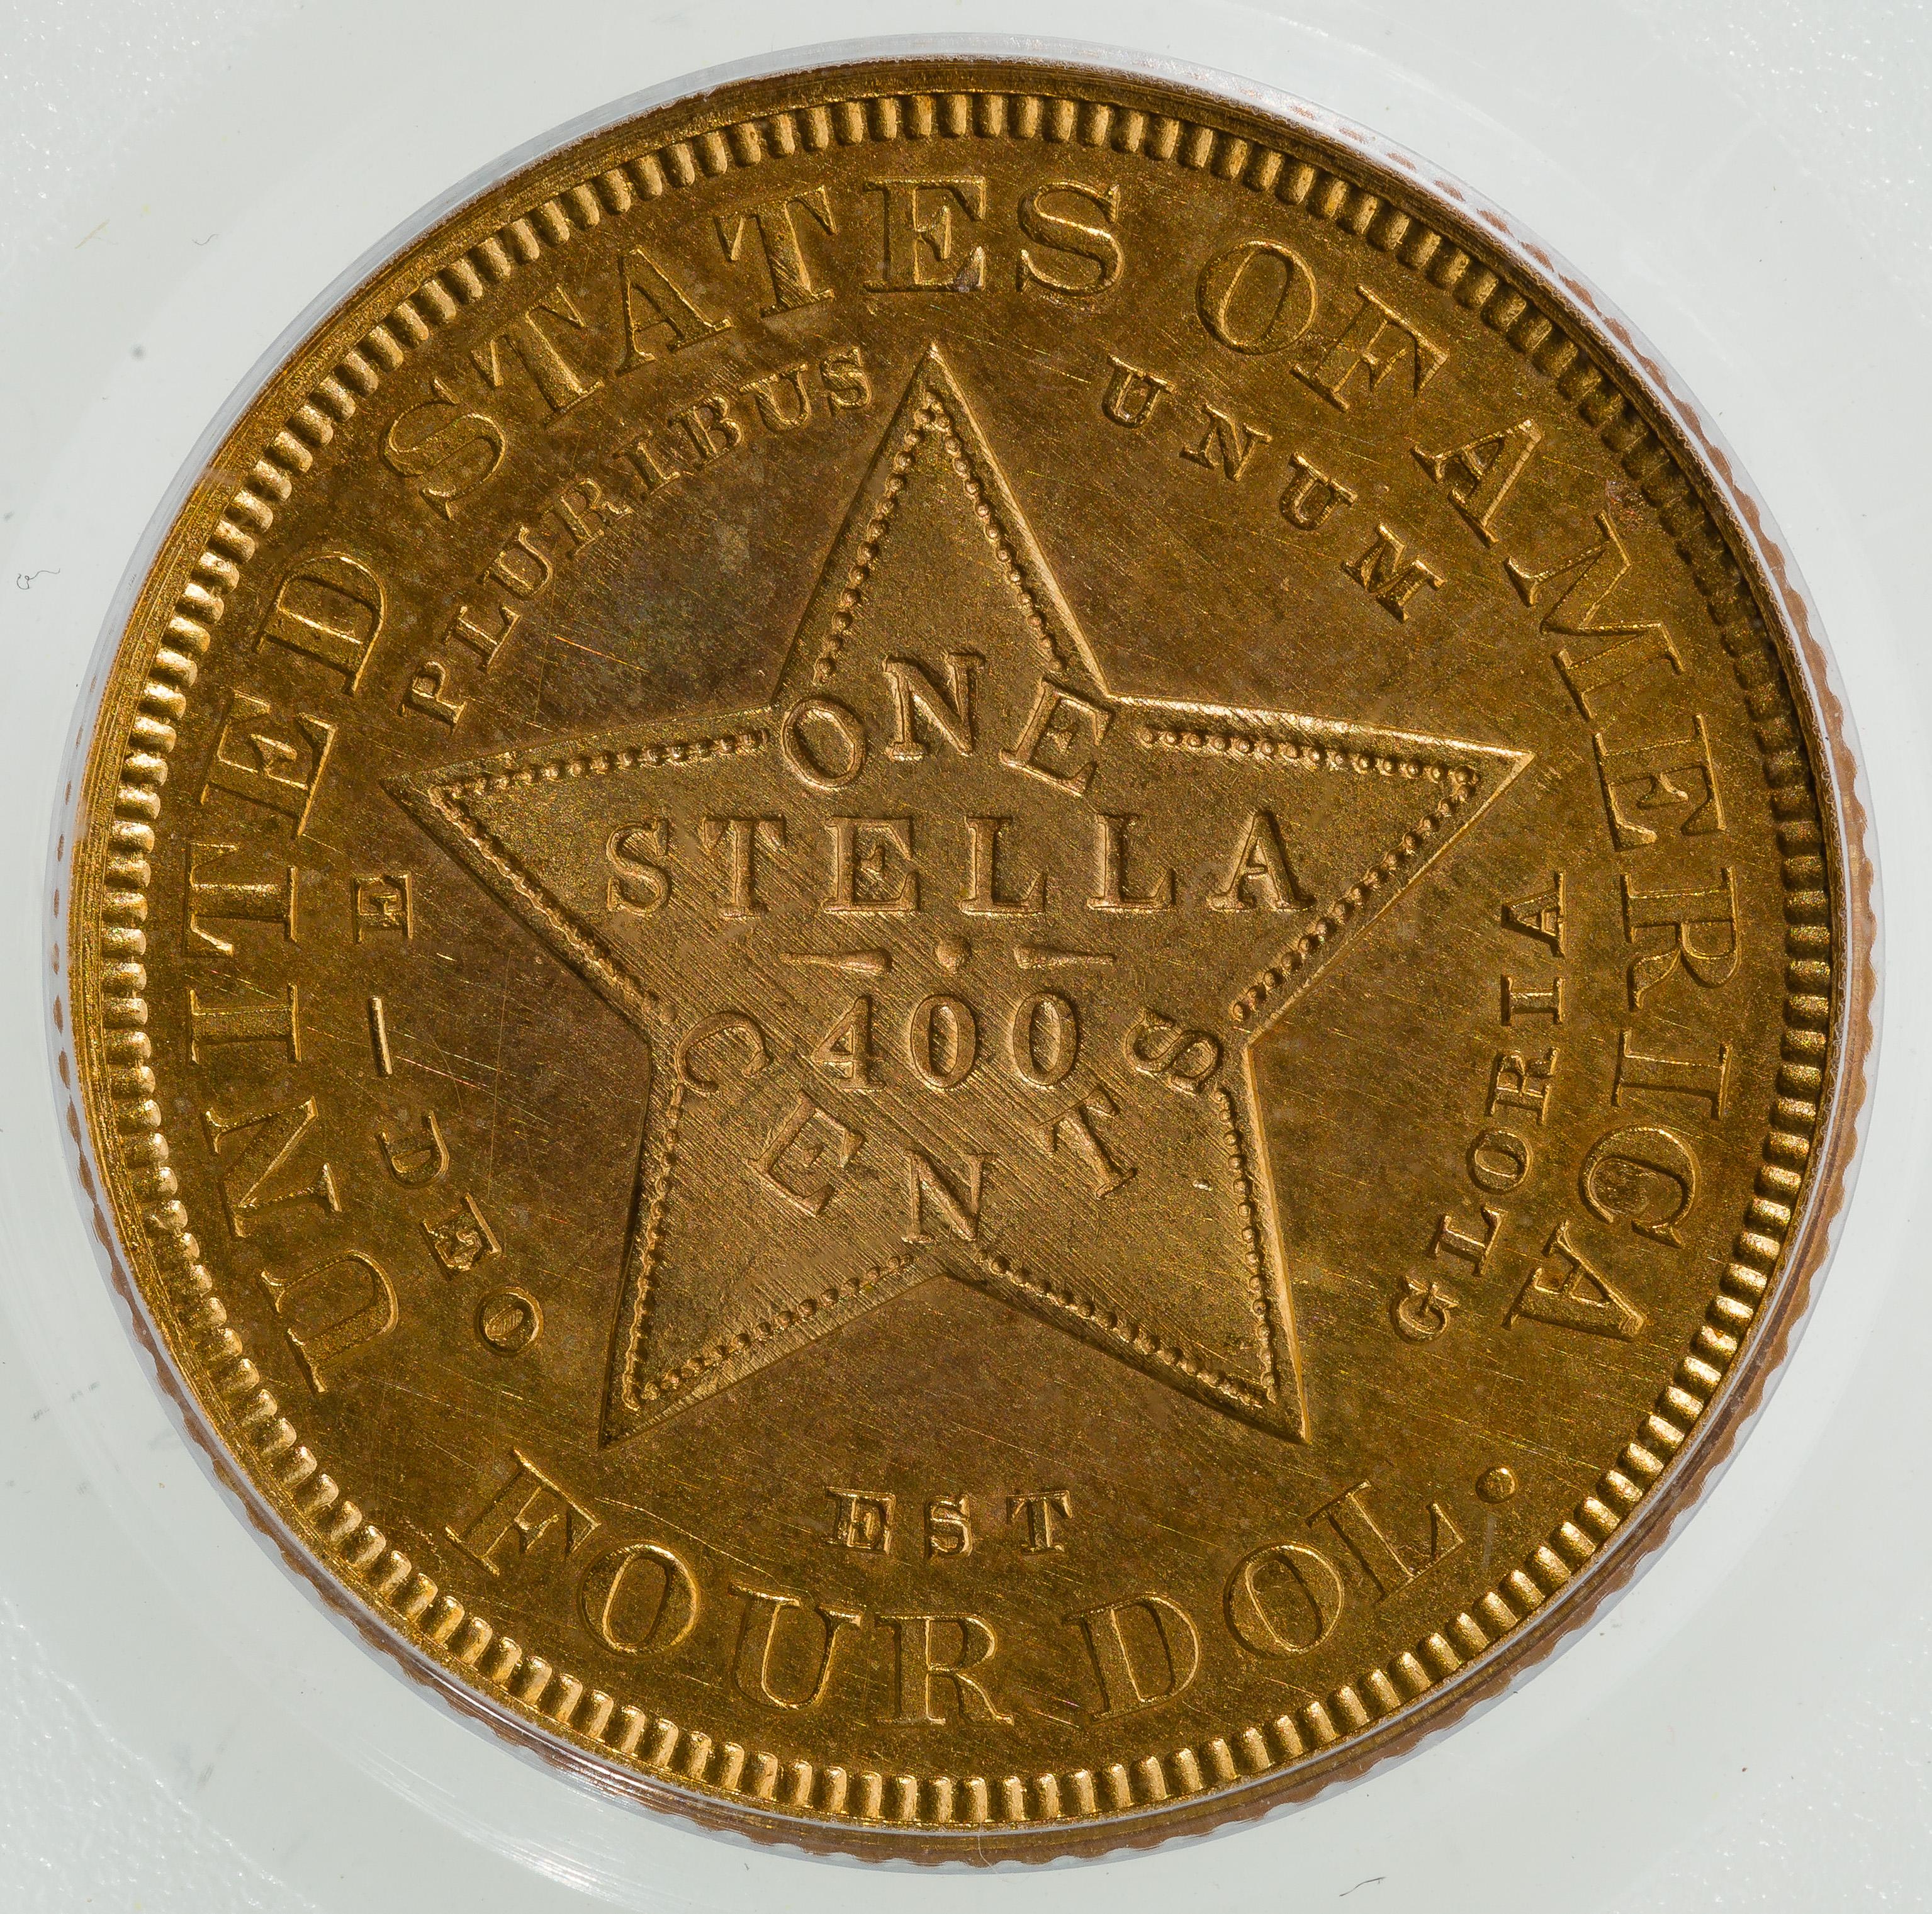 1879 $4 Stella PR-63 PCGS